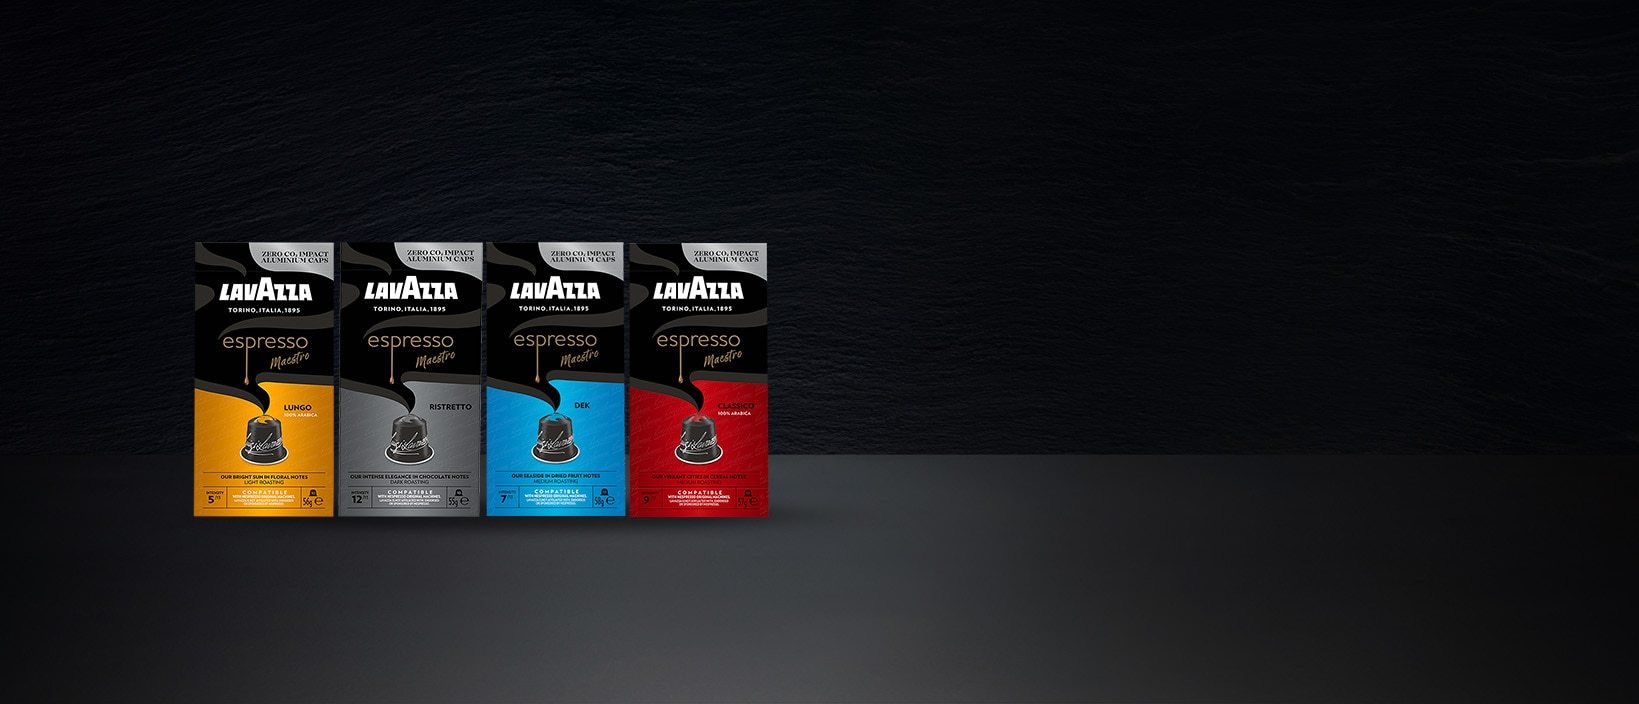 Kapsułki Lavazza Espresso Maestro kompatybilne z systemem Nespresso